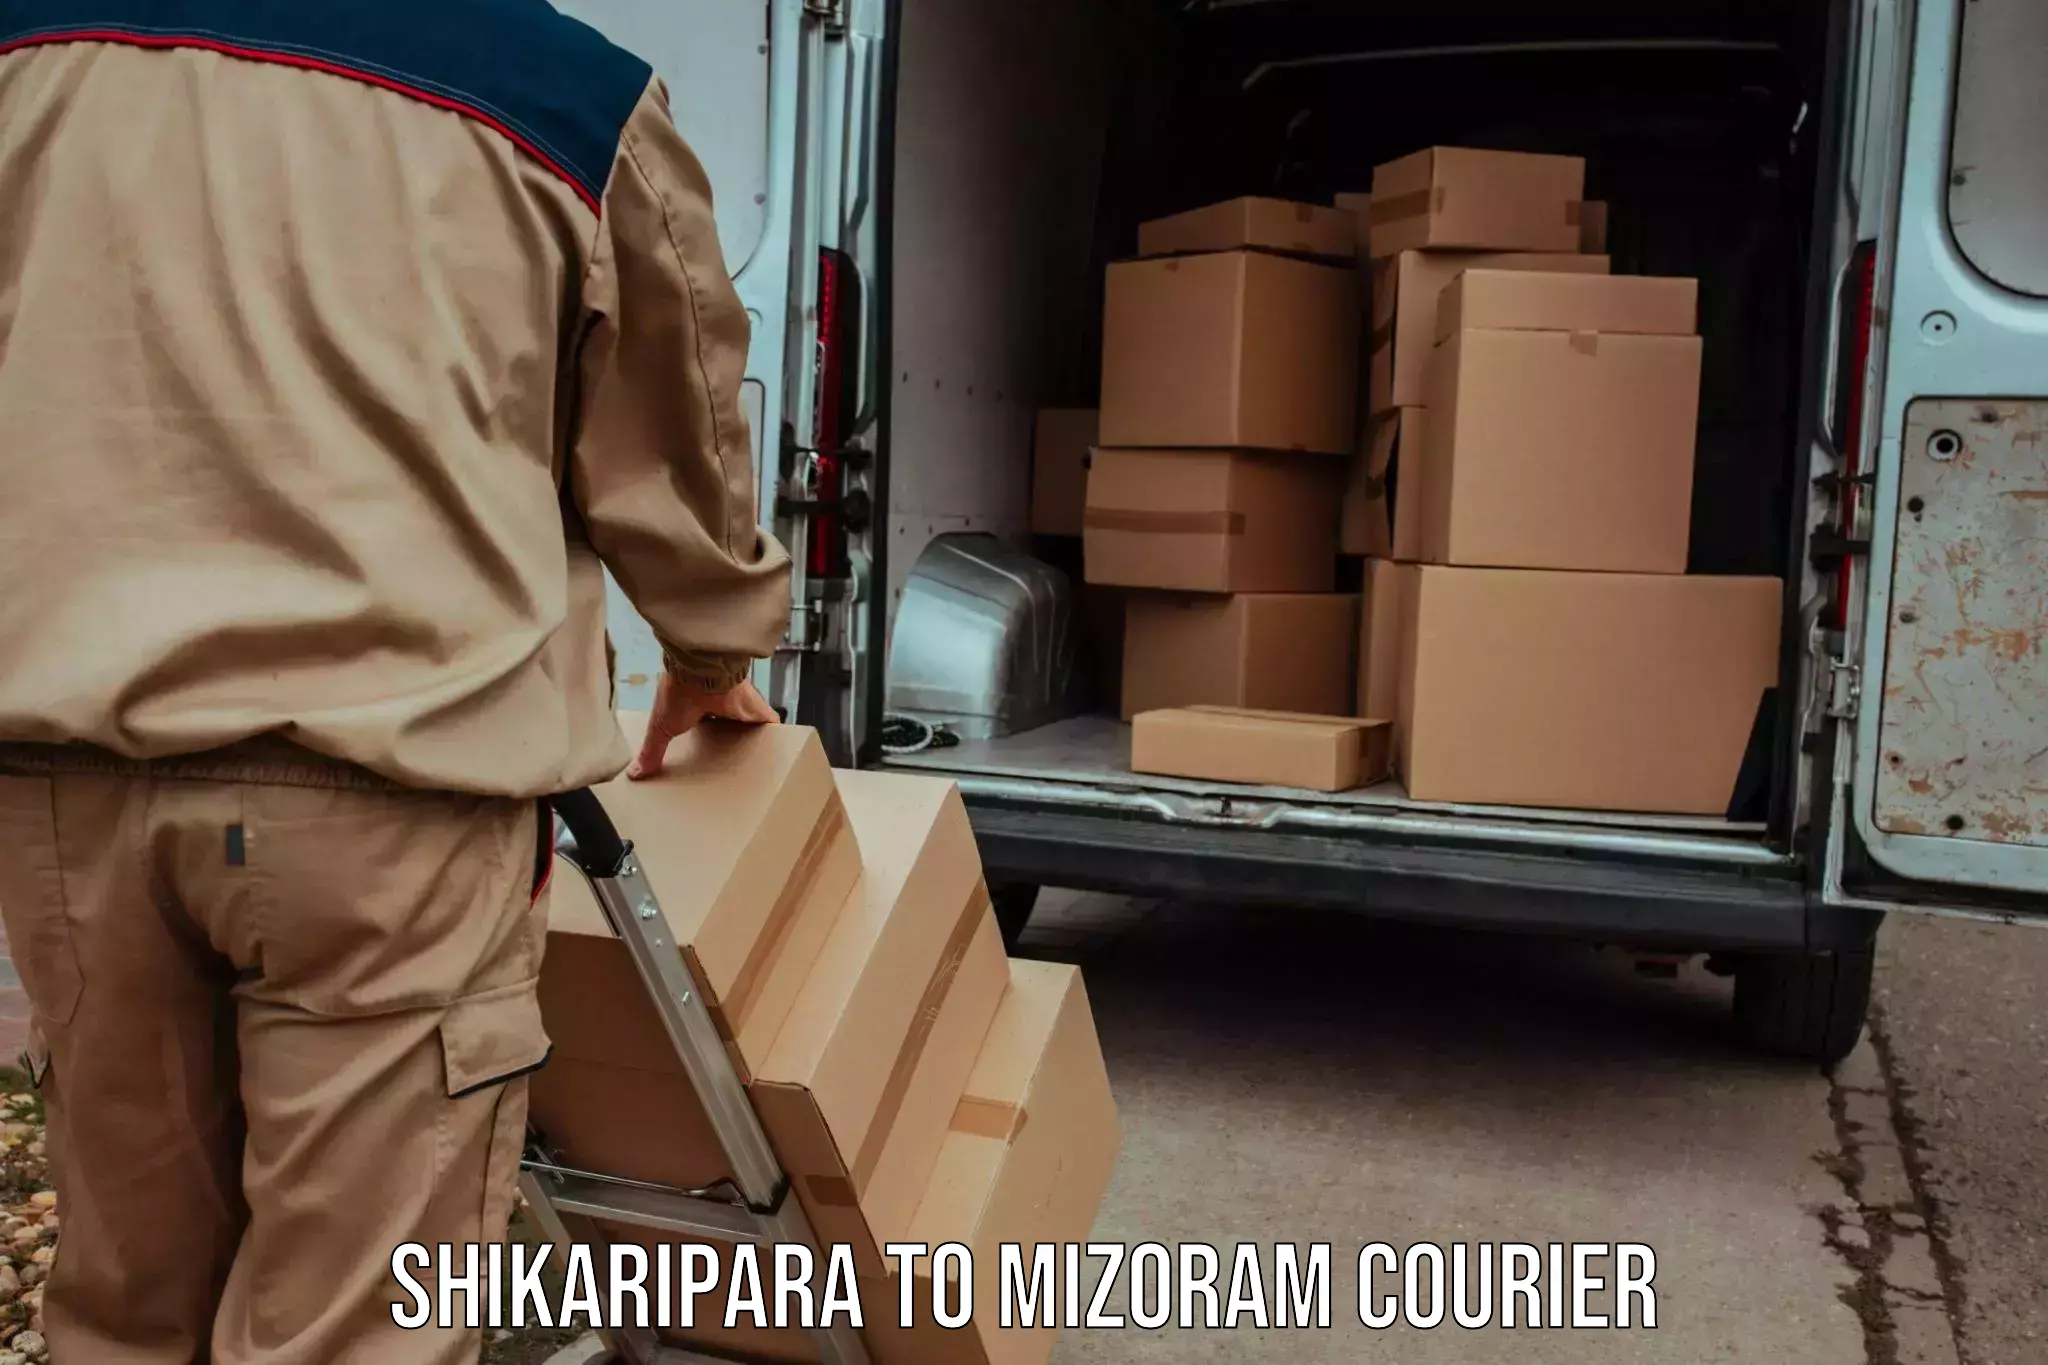 Courier service comparison Shikaripara to Mizoram